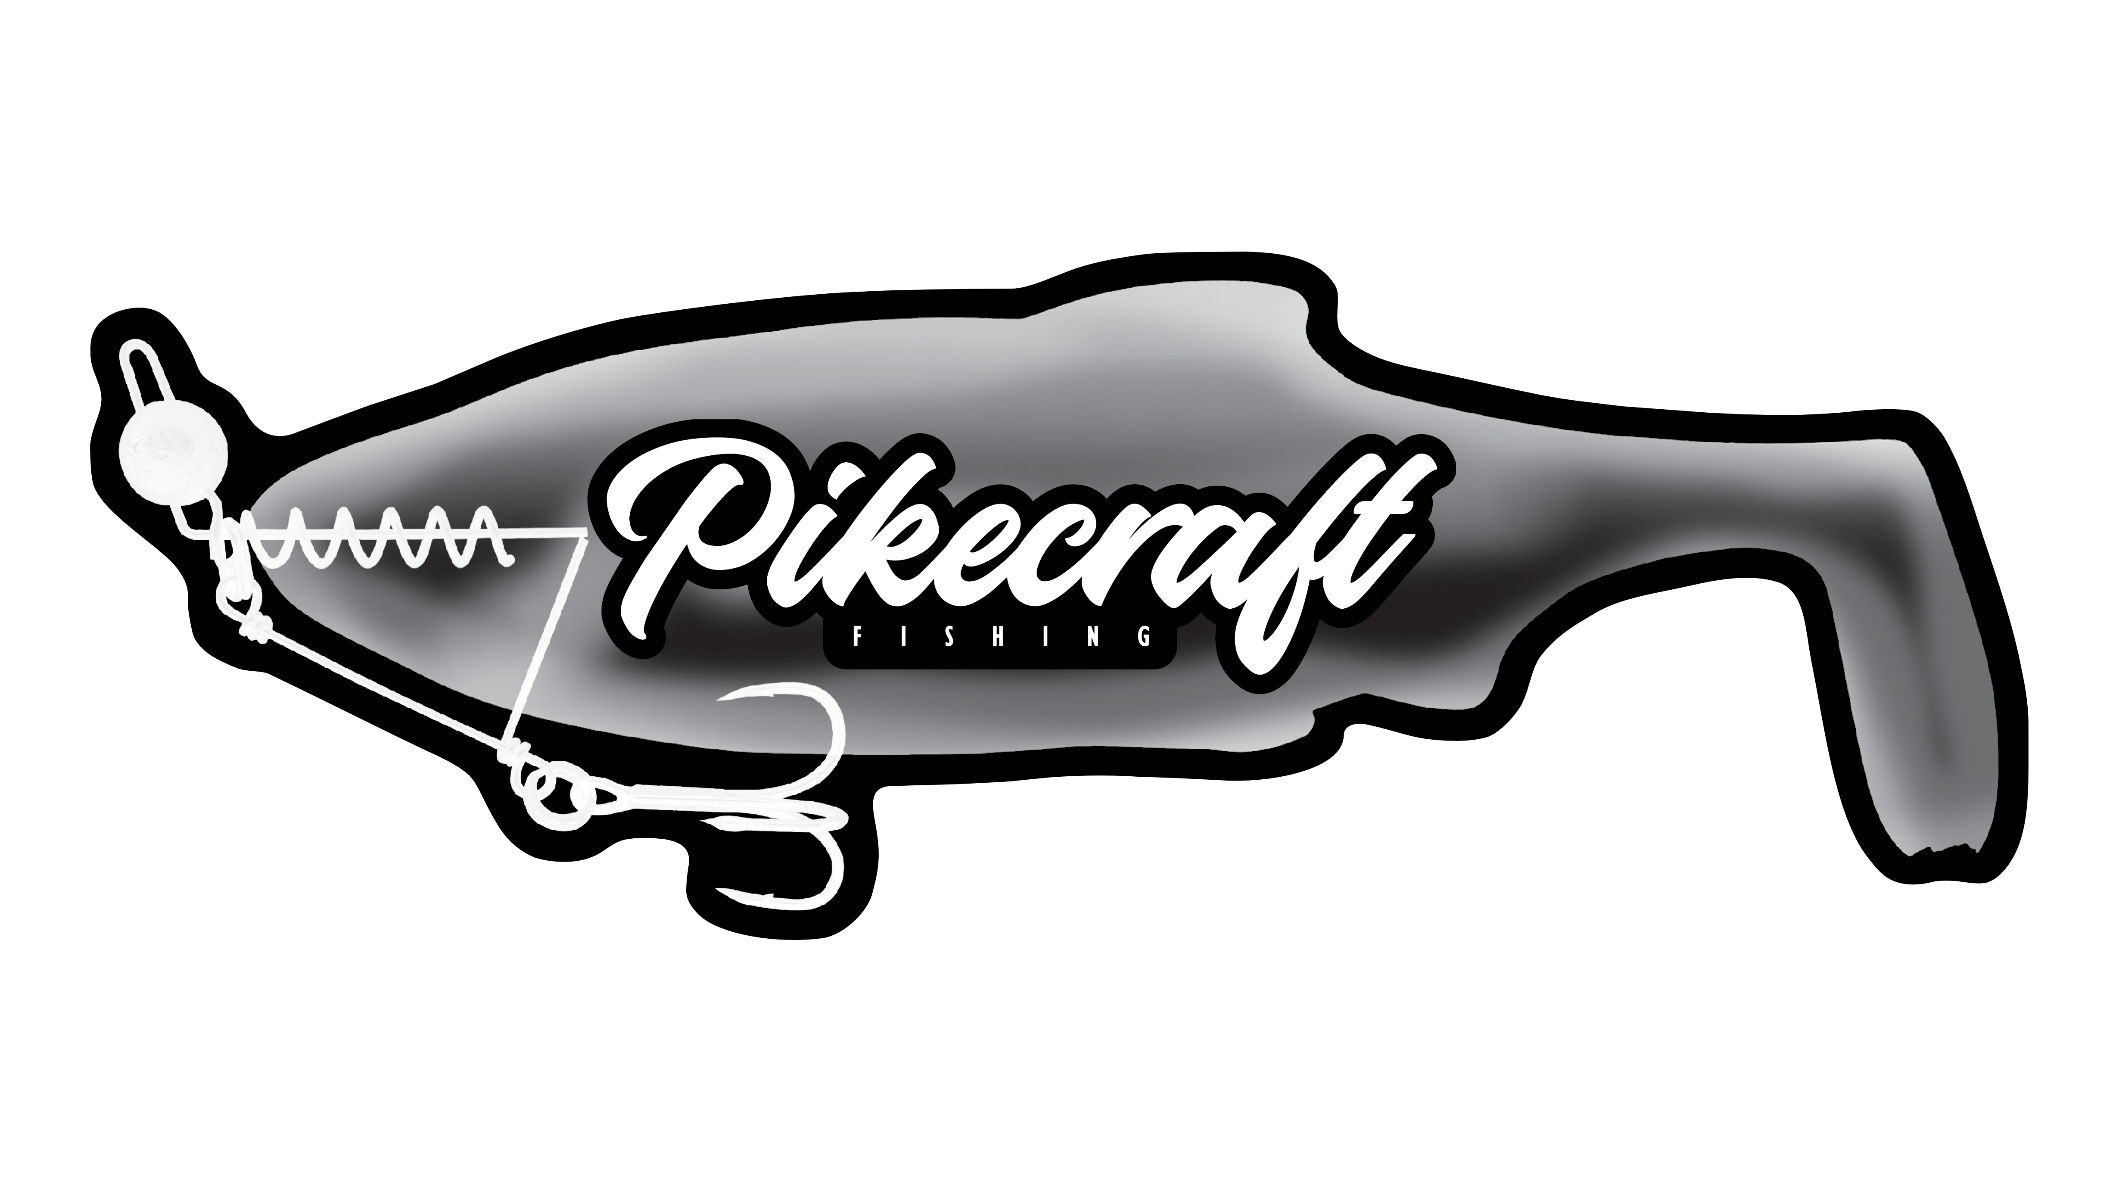 Logo Pikecraft Fishing